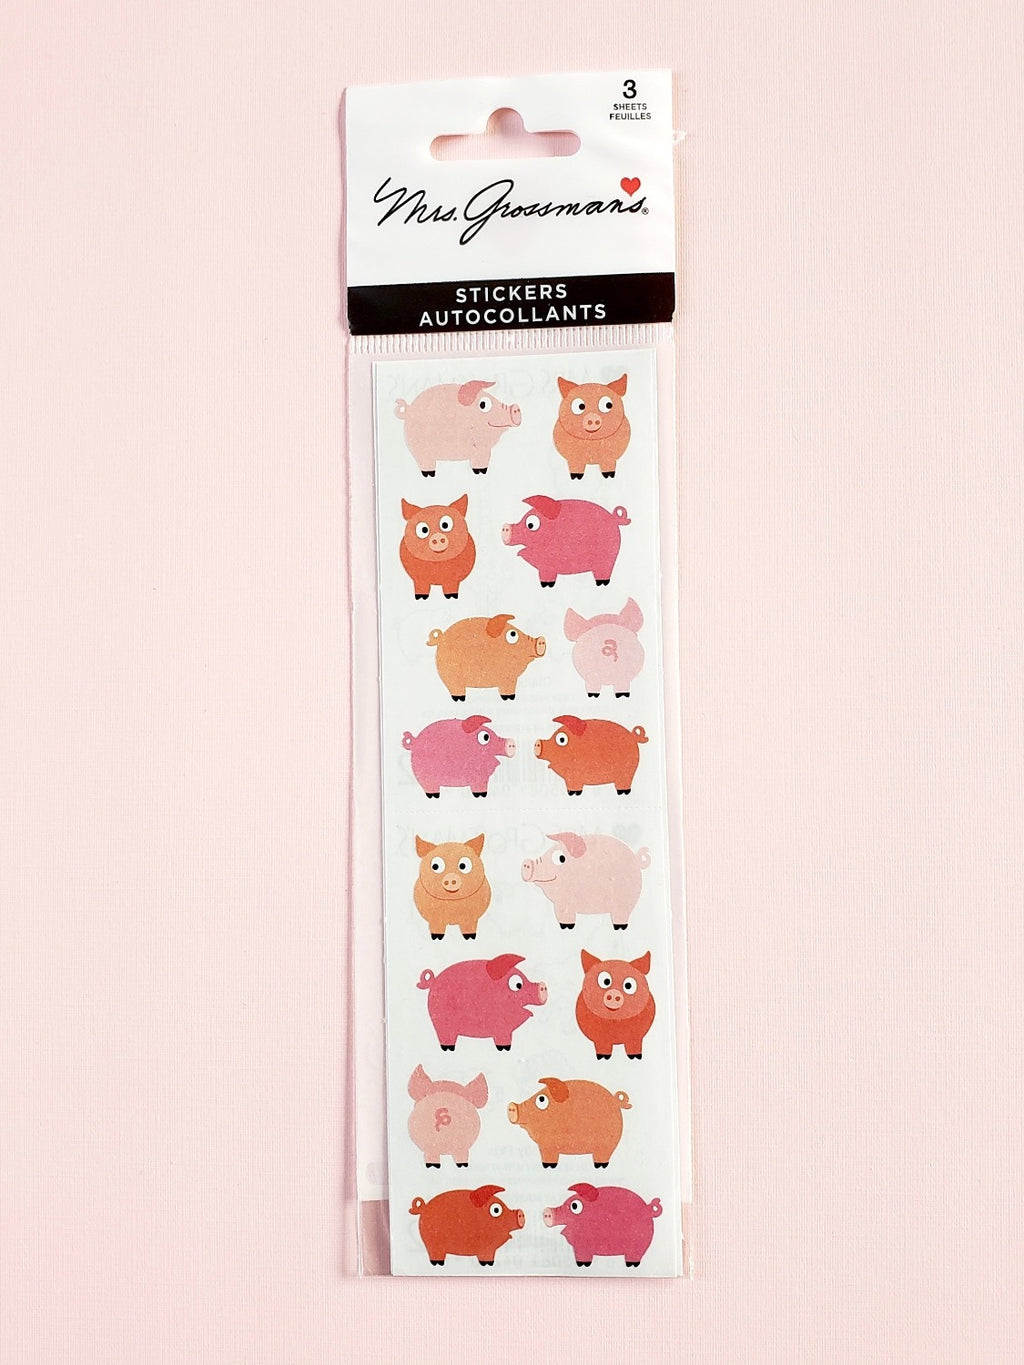 Mrs Grossman's chubby pink pig stickers